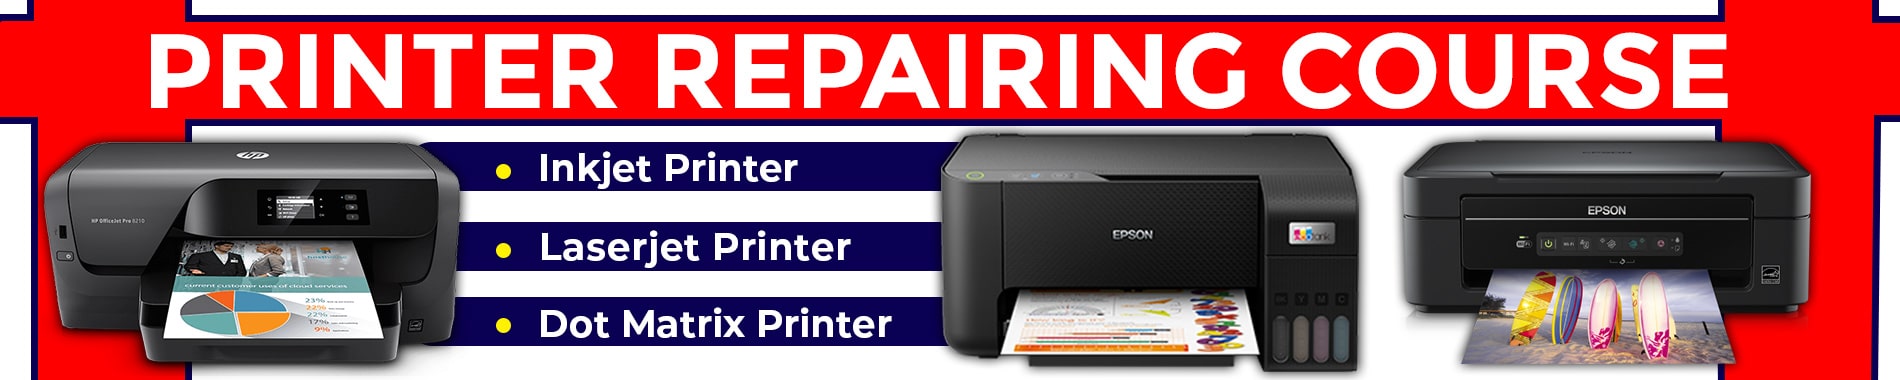 printer repairing course